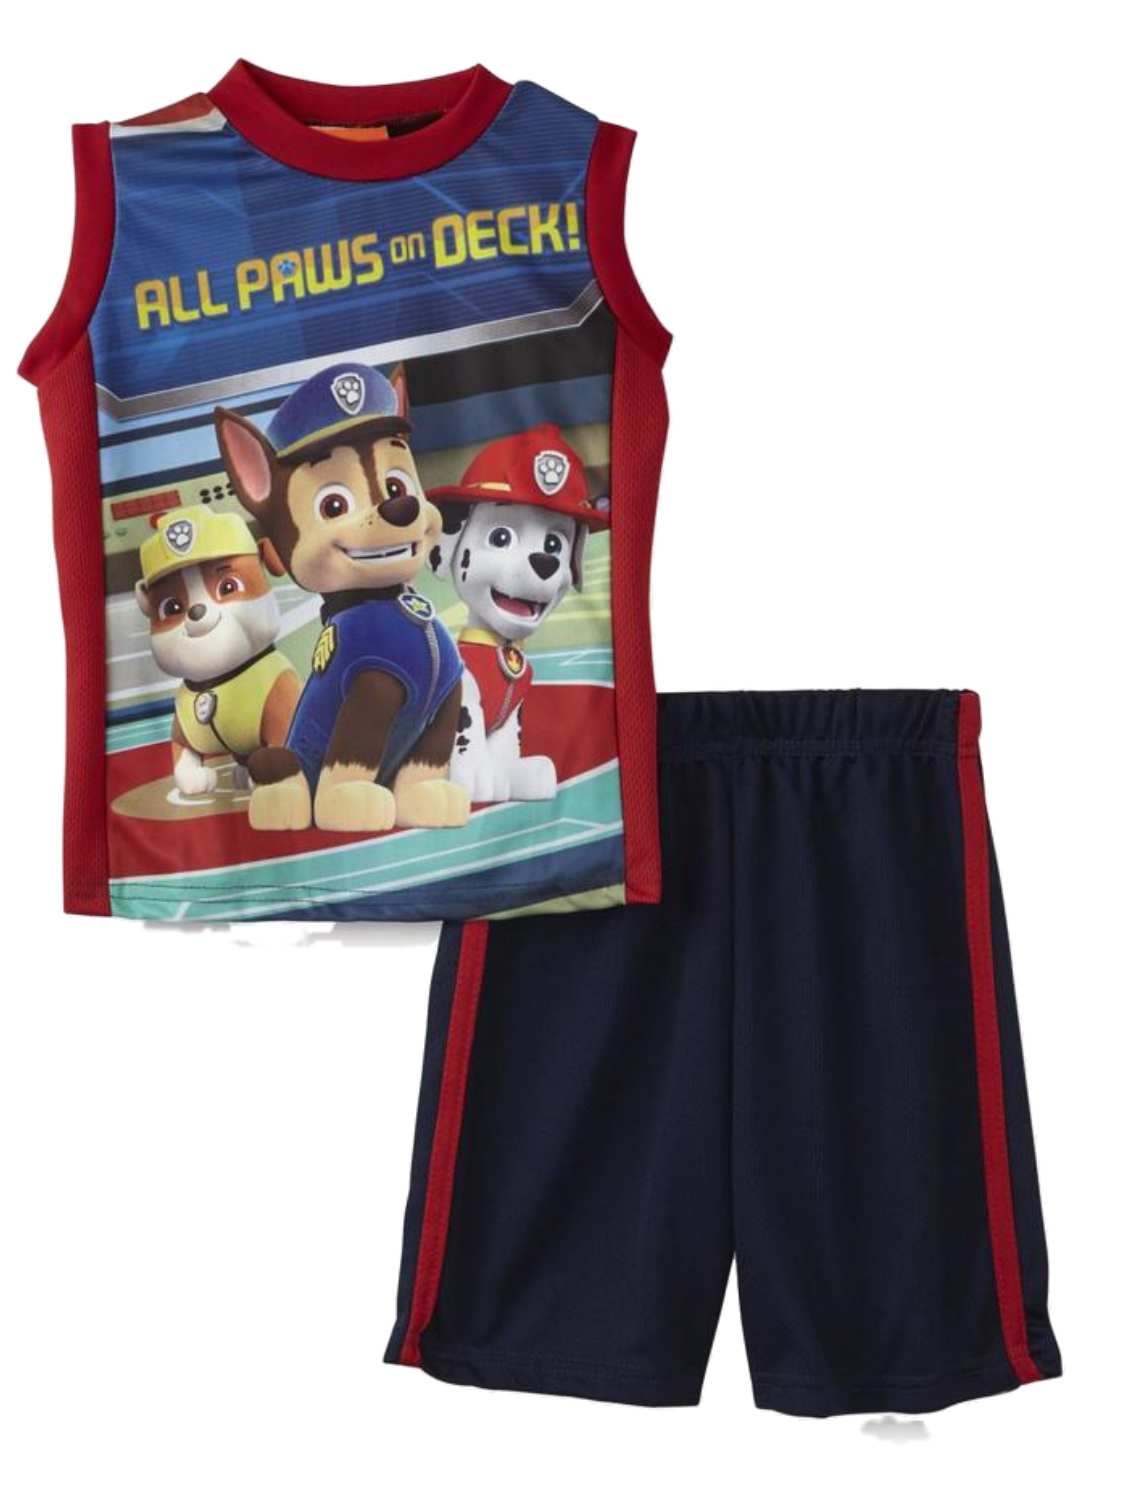 Paw Patrol Toddler Boys Tank Top Shorts Set Size 3T Puppy Dogs Sleeveless Shirt